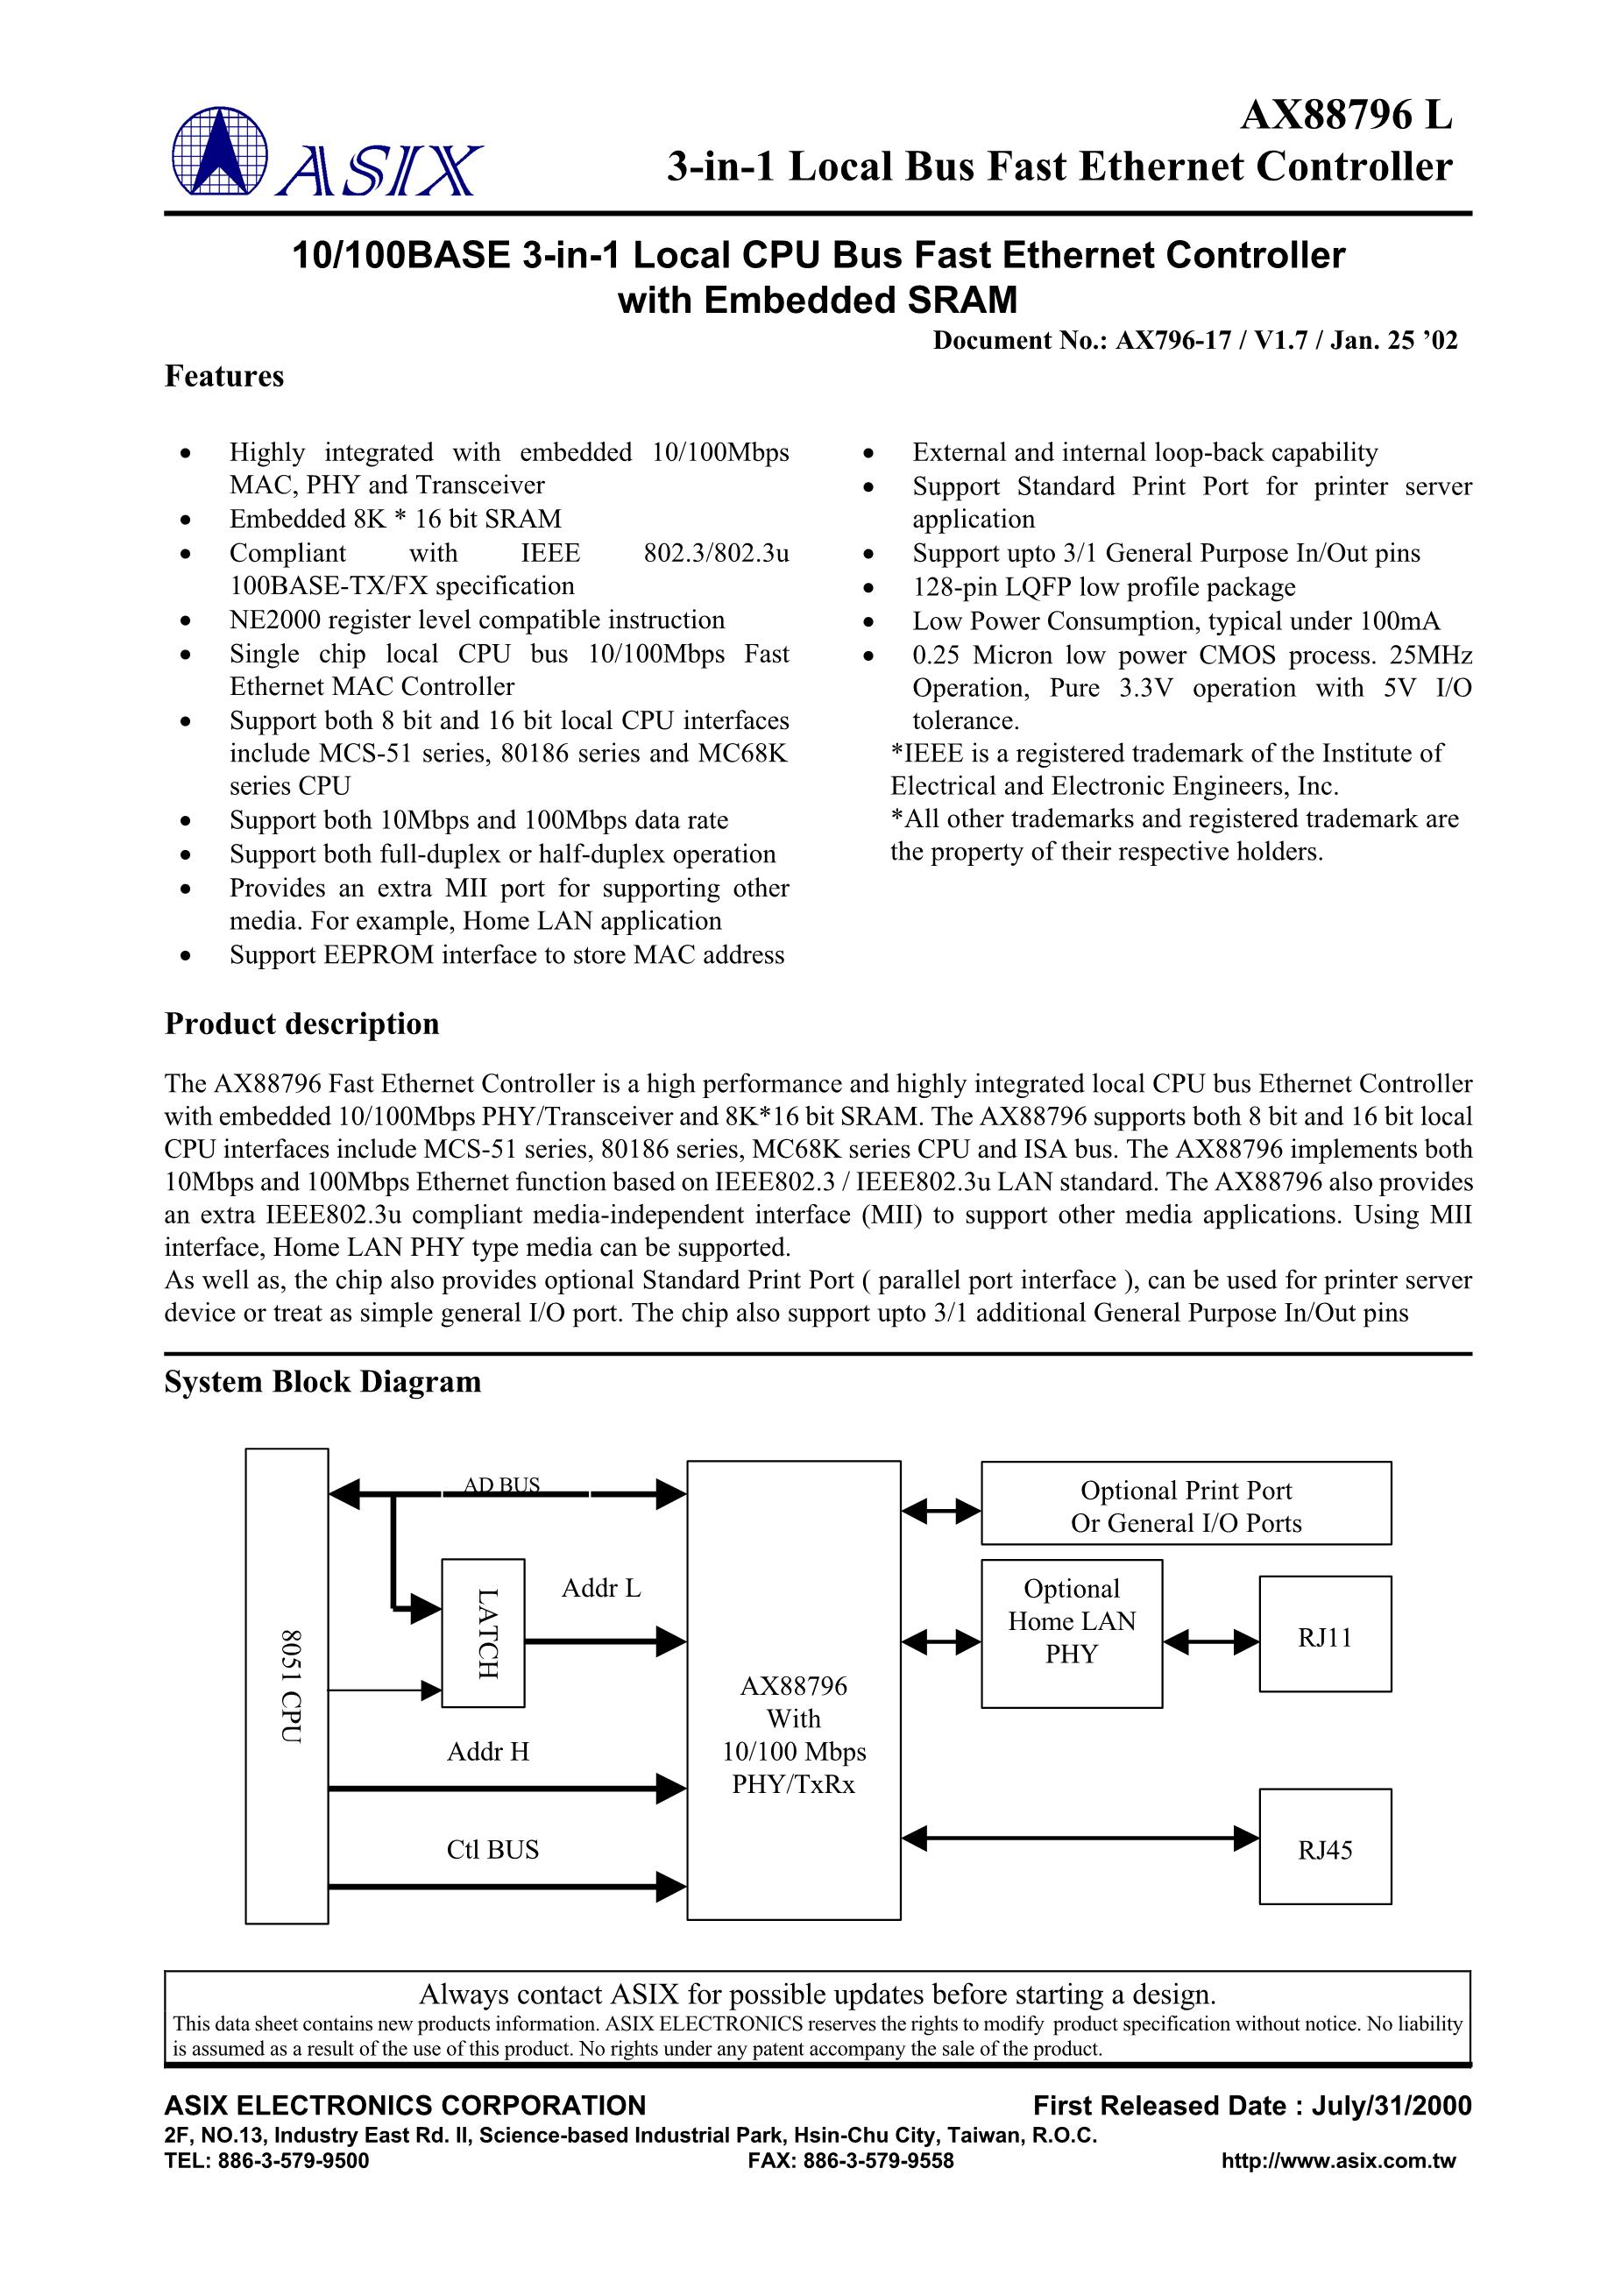 AX88796BLI's pdf picture 1